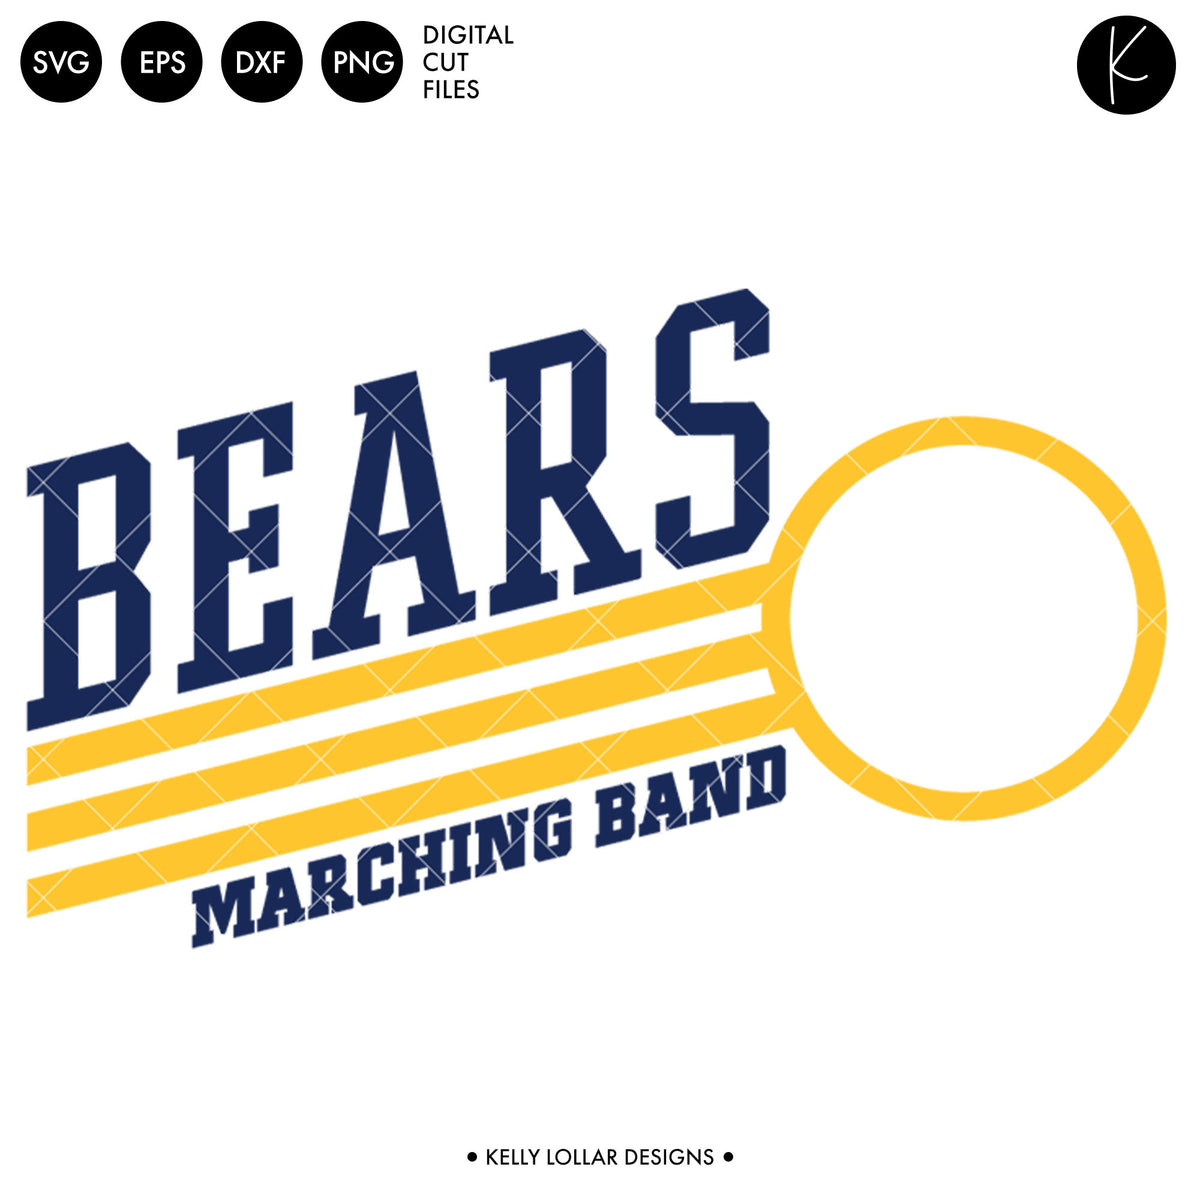 Bears Band Bundle | SVG DXF EPS PNG Cut Files